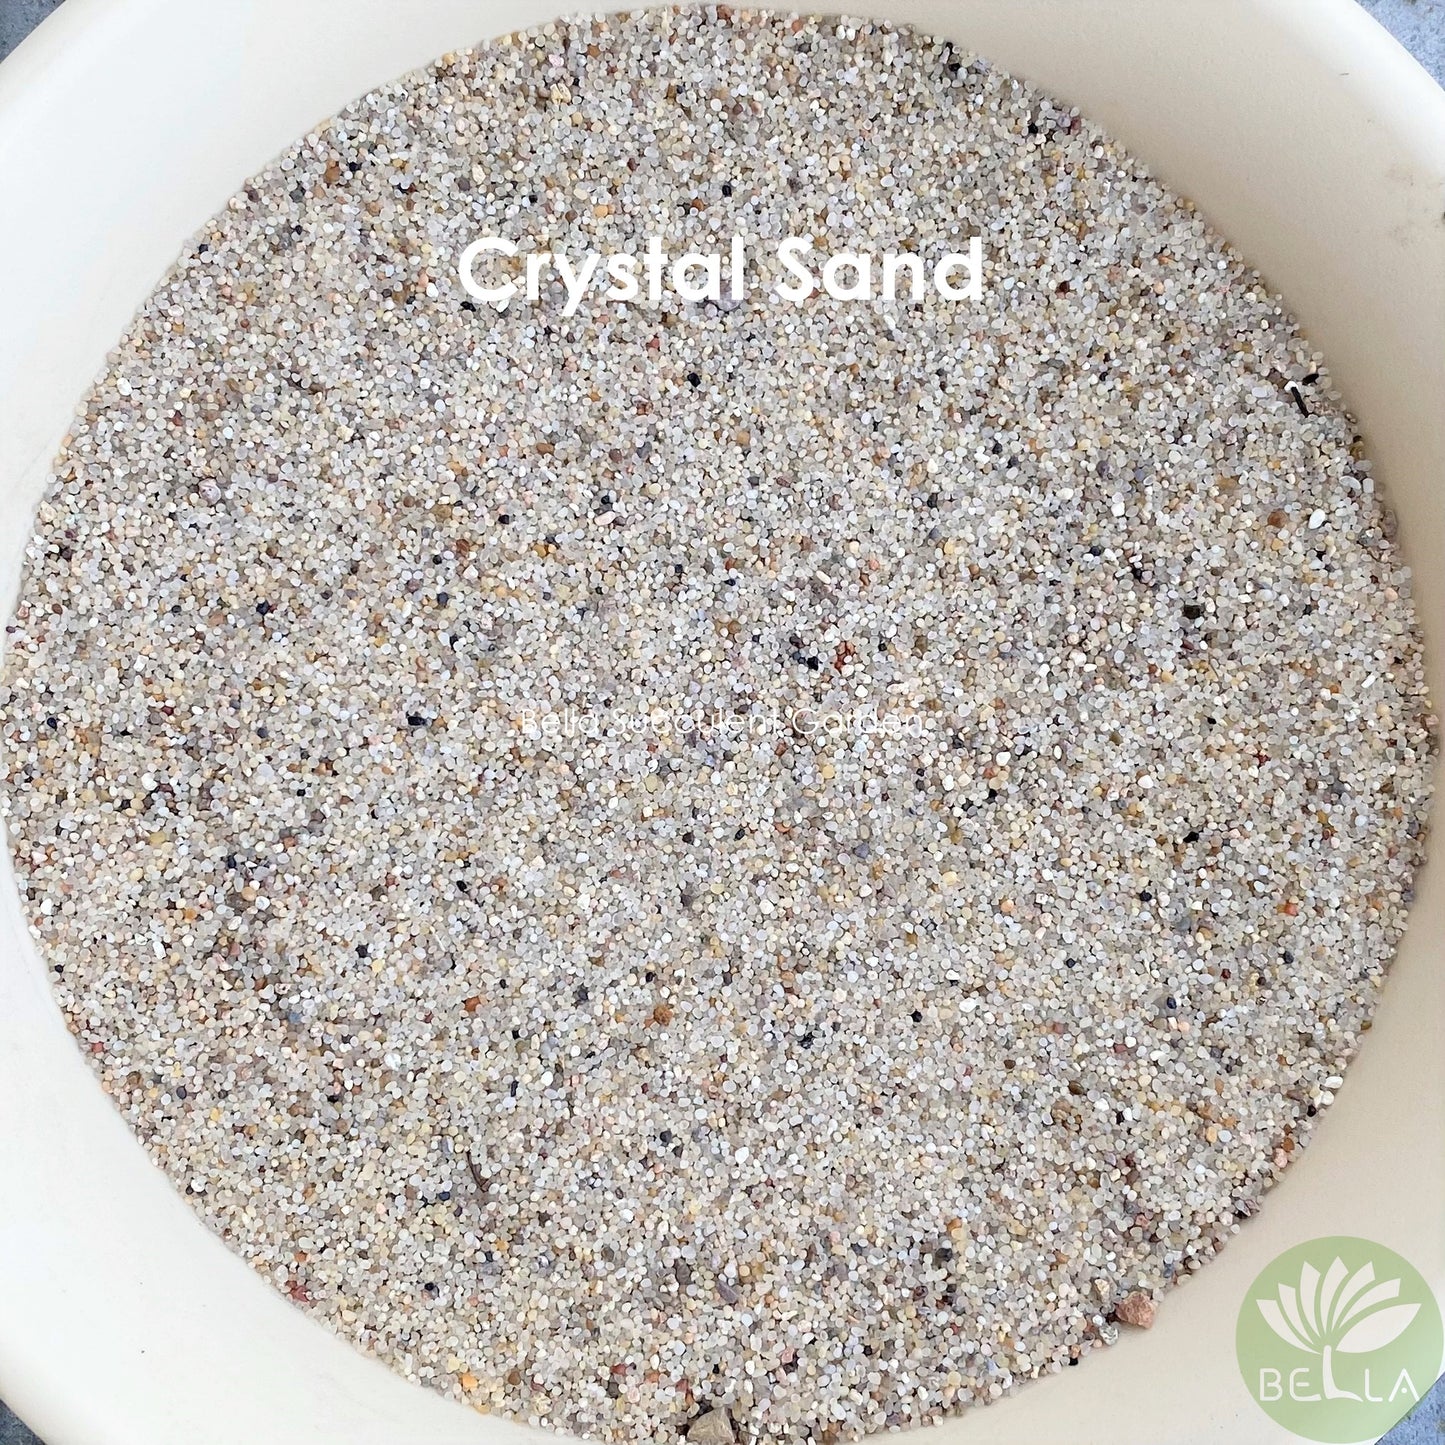 Crystal Sand